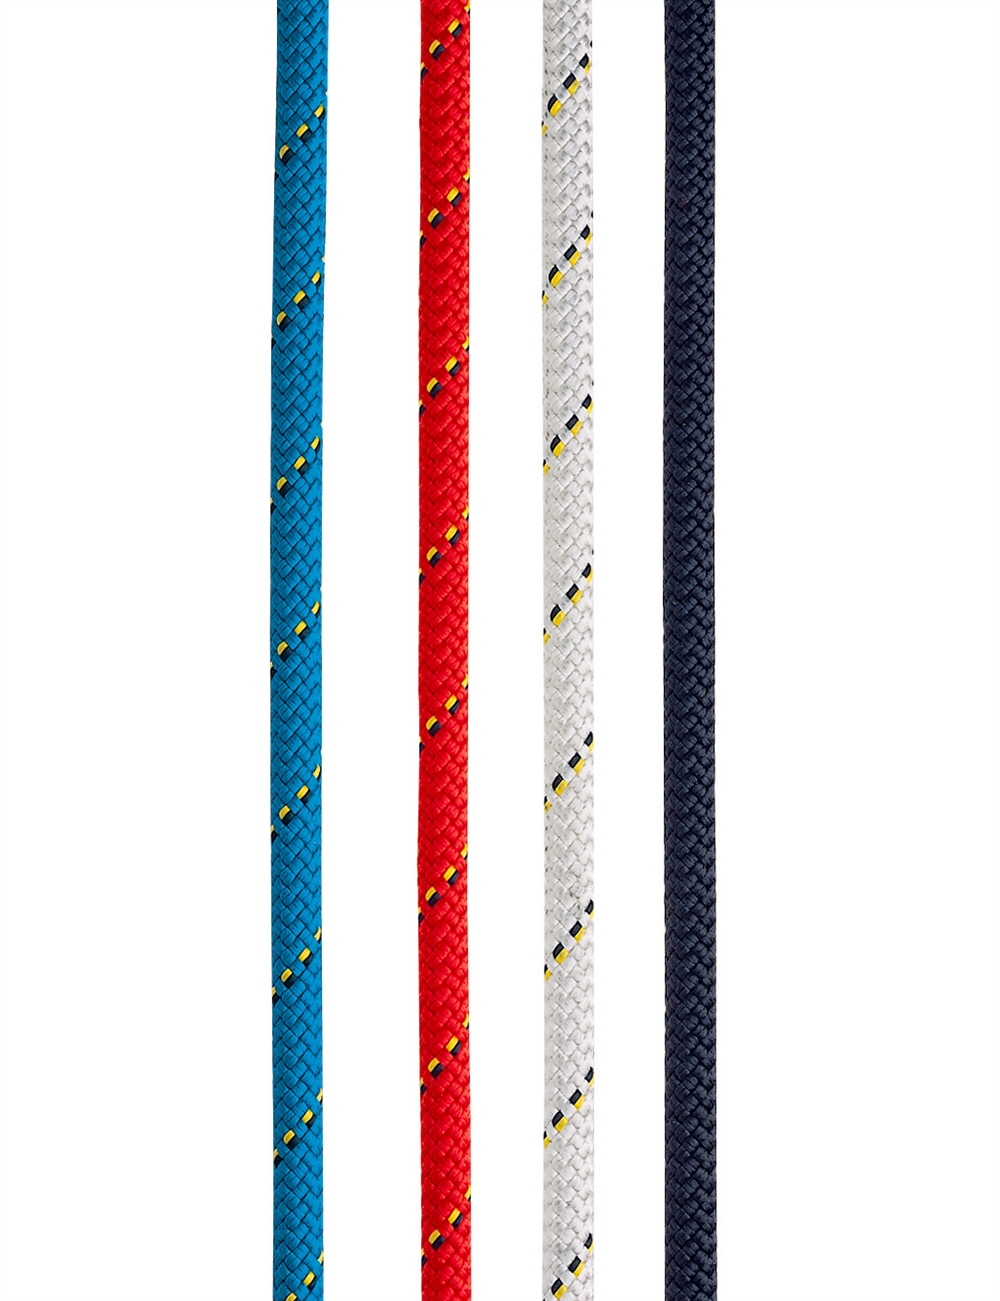 Petzl VECTOR rope 11mm x 183m